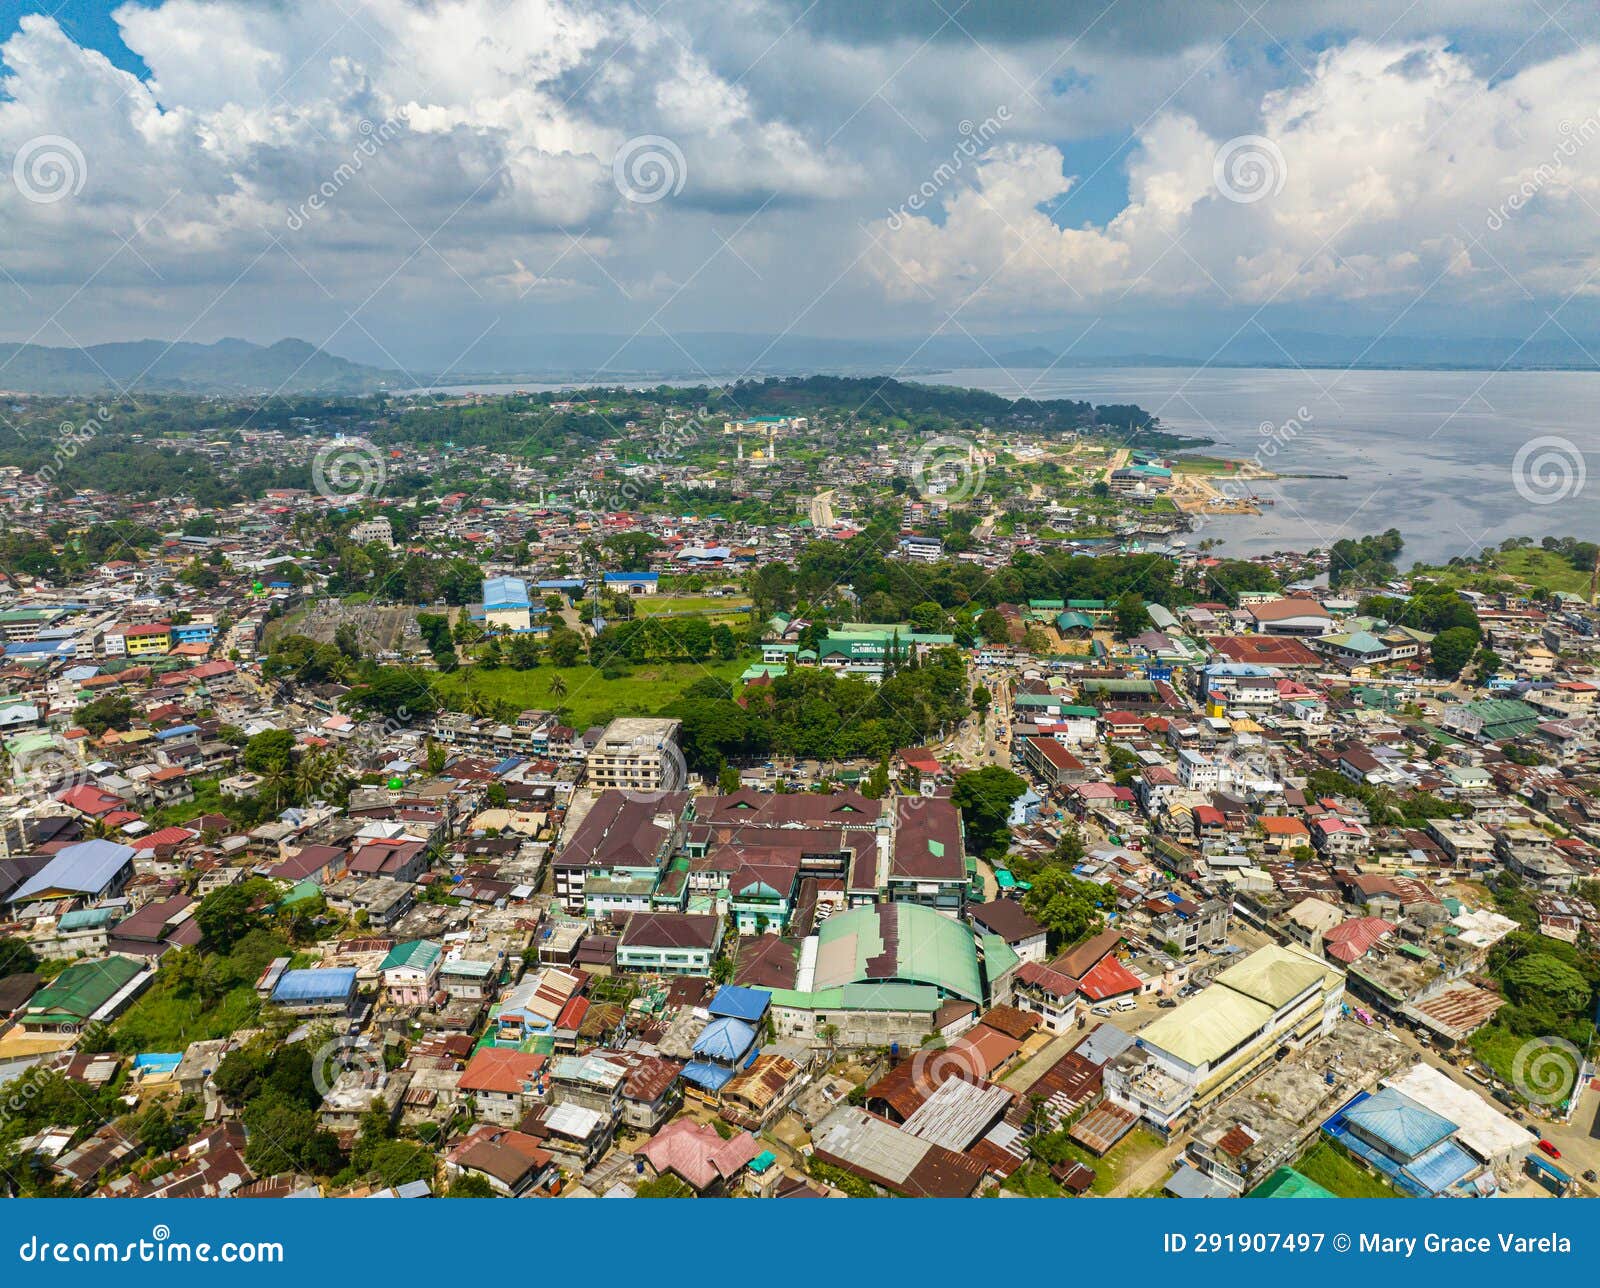 marawi city in lanao del sur. islamic city in philippines.